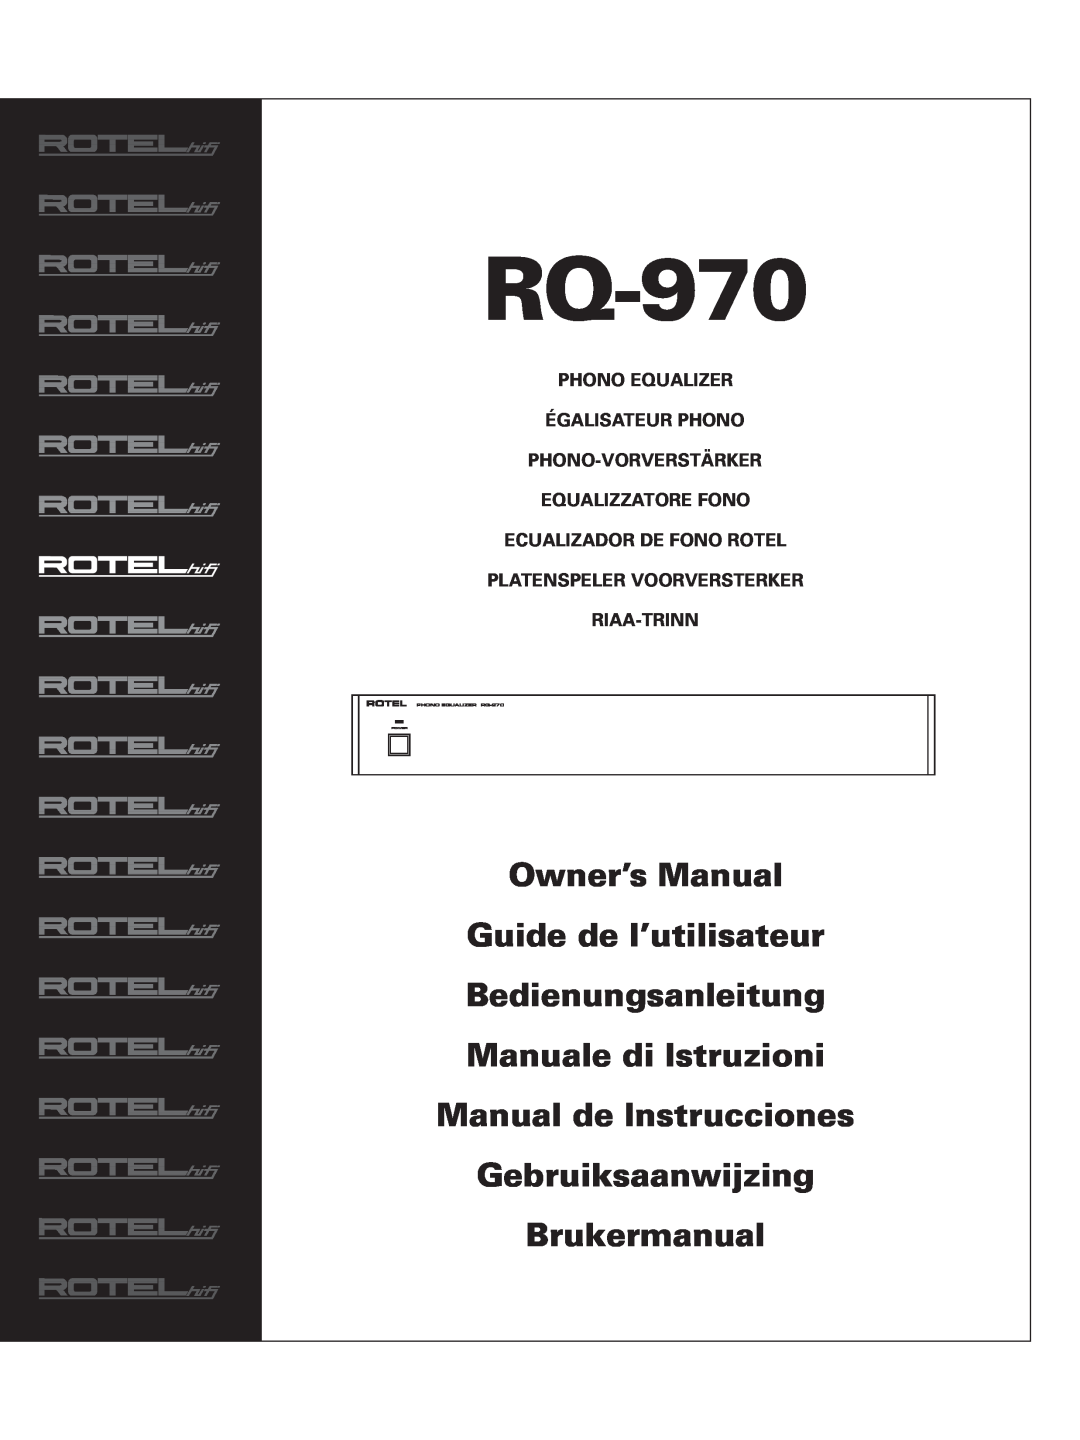 Rotel RQ-970 owner manual Phono Equalizer Égalisateur Phono, Phono-Vorverstärker Equalizzatore Fono, Brukermanual, Power 